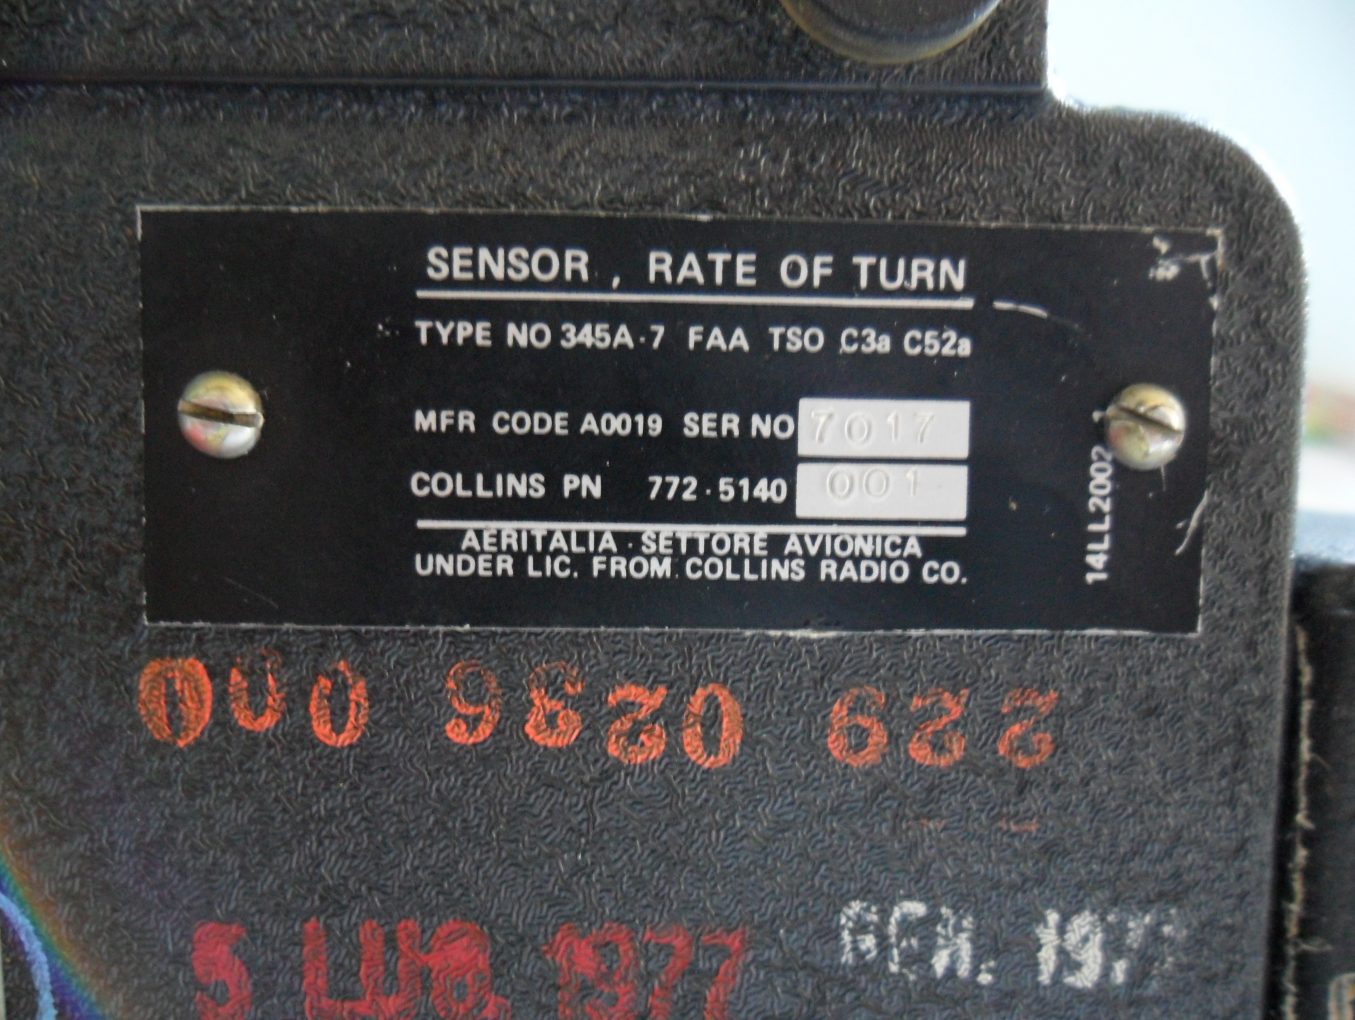 TURN RATE SENSOR – Avioelectronics Company